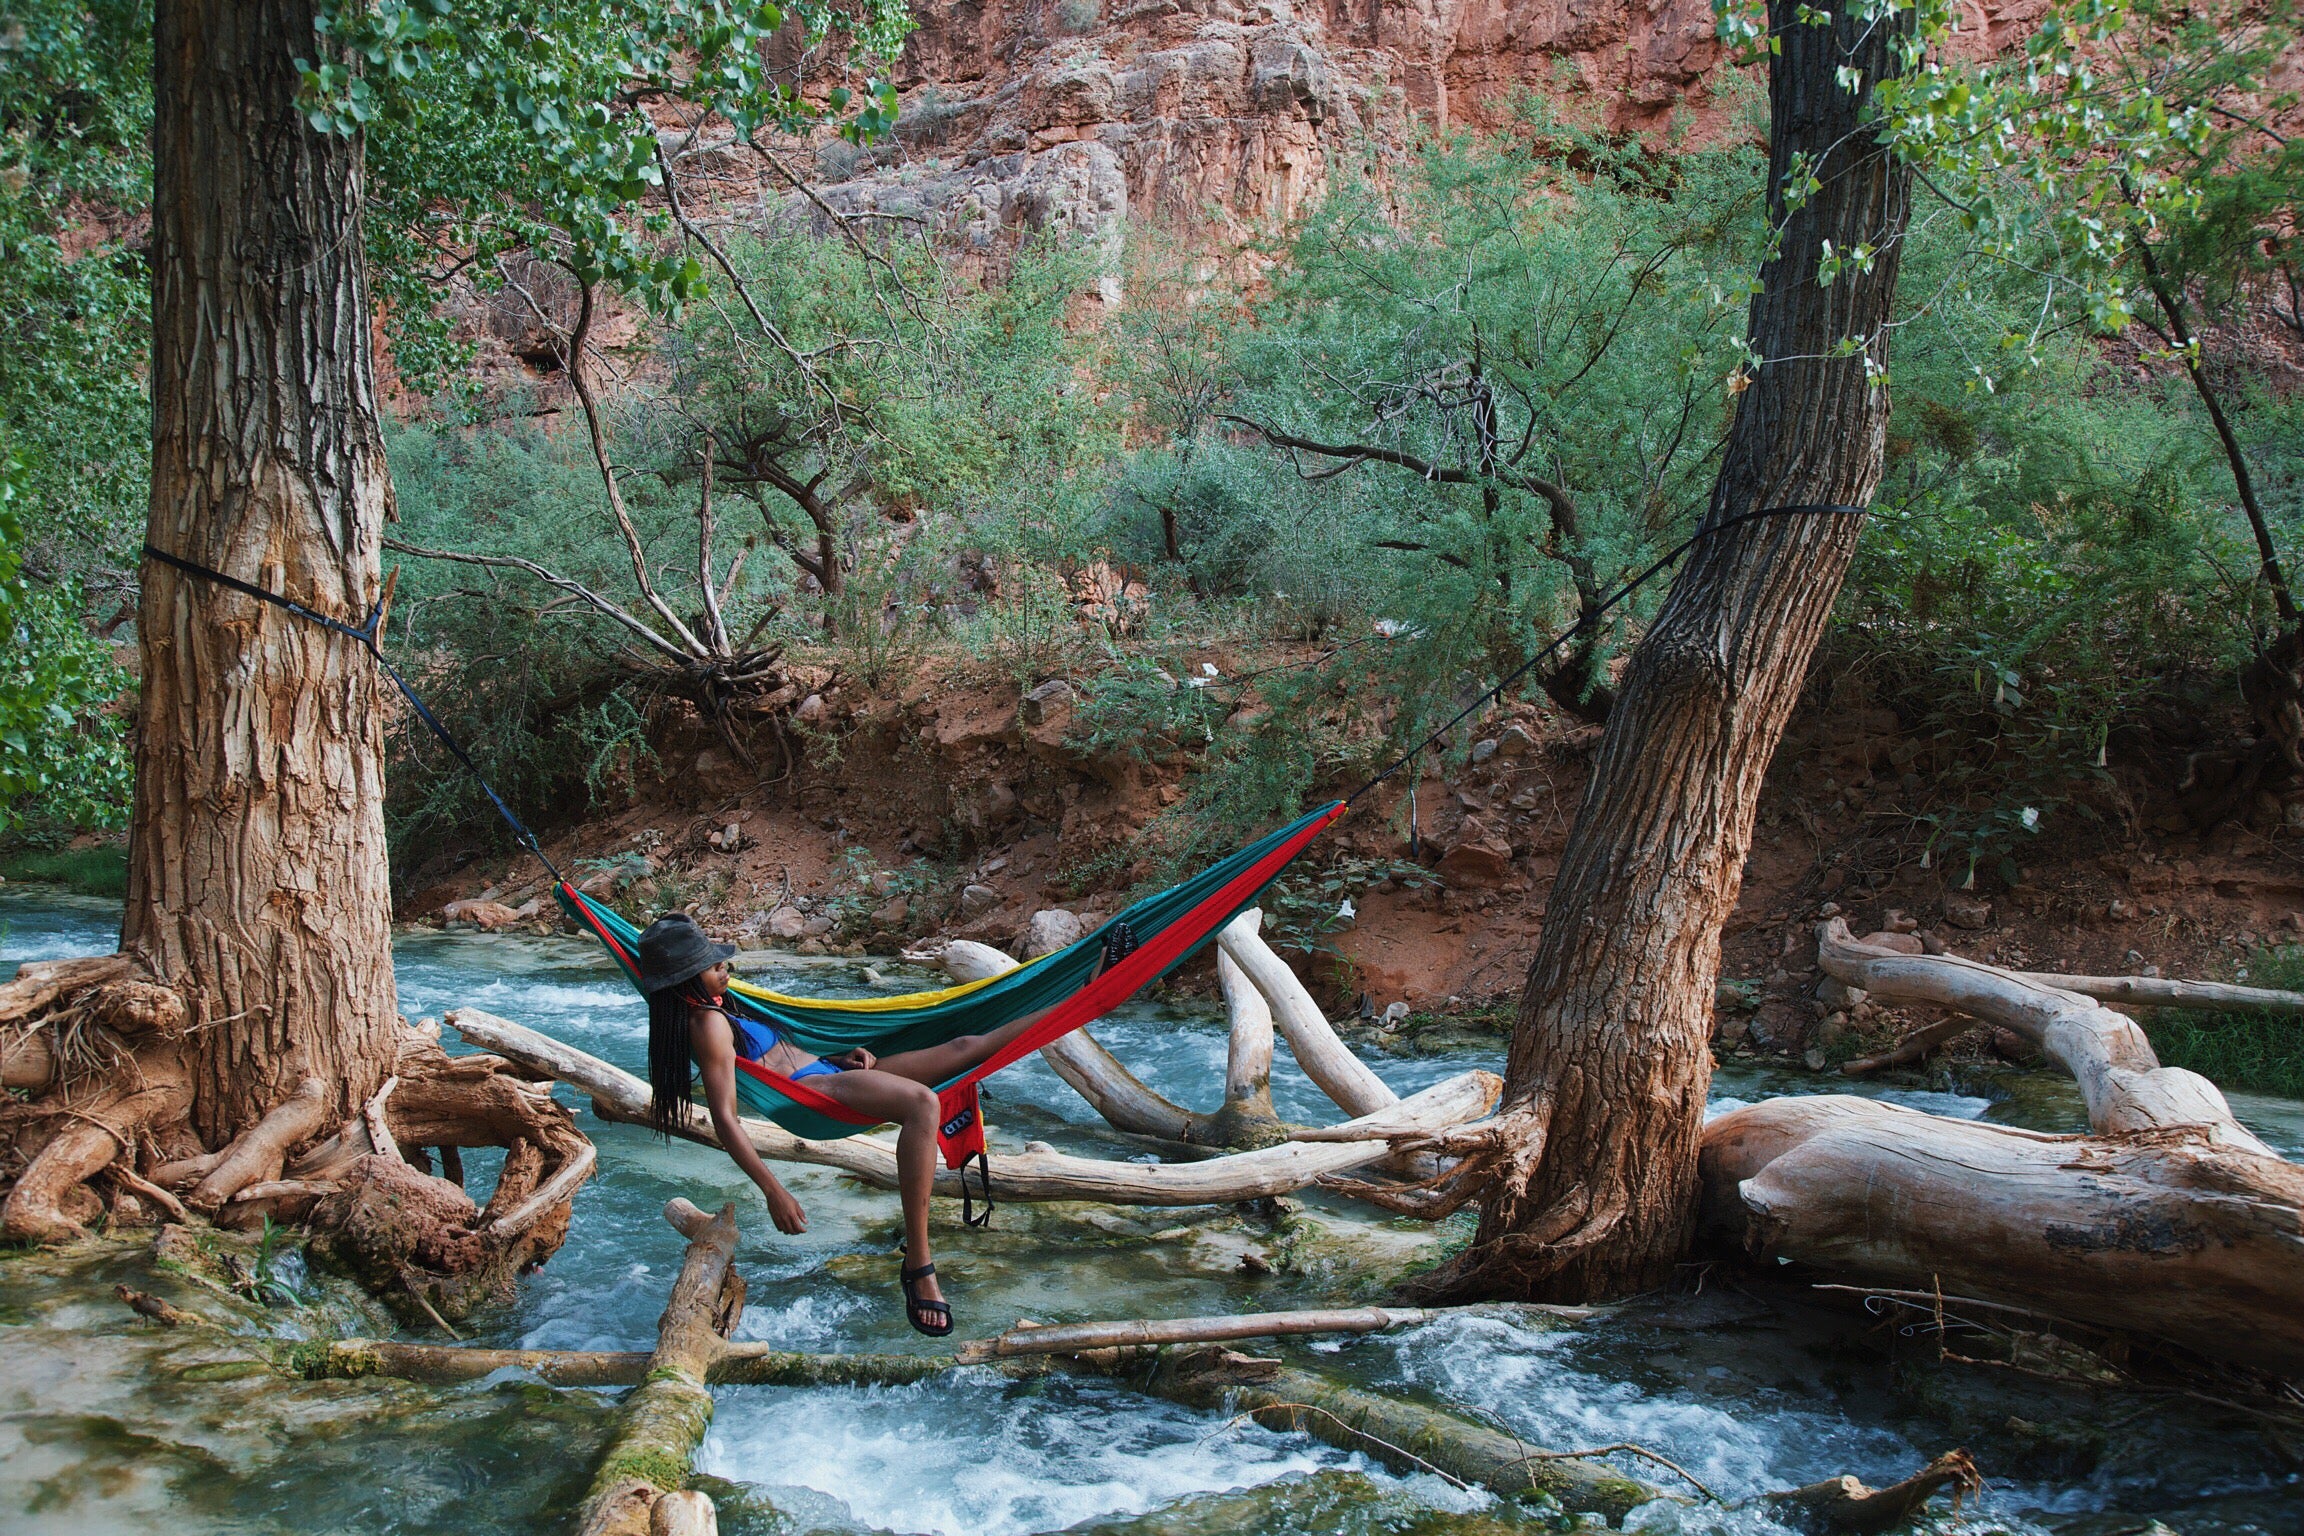 One Black Woman's Wild, Fabulous Hiking Adventure in Arizona
